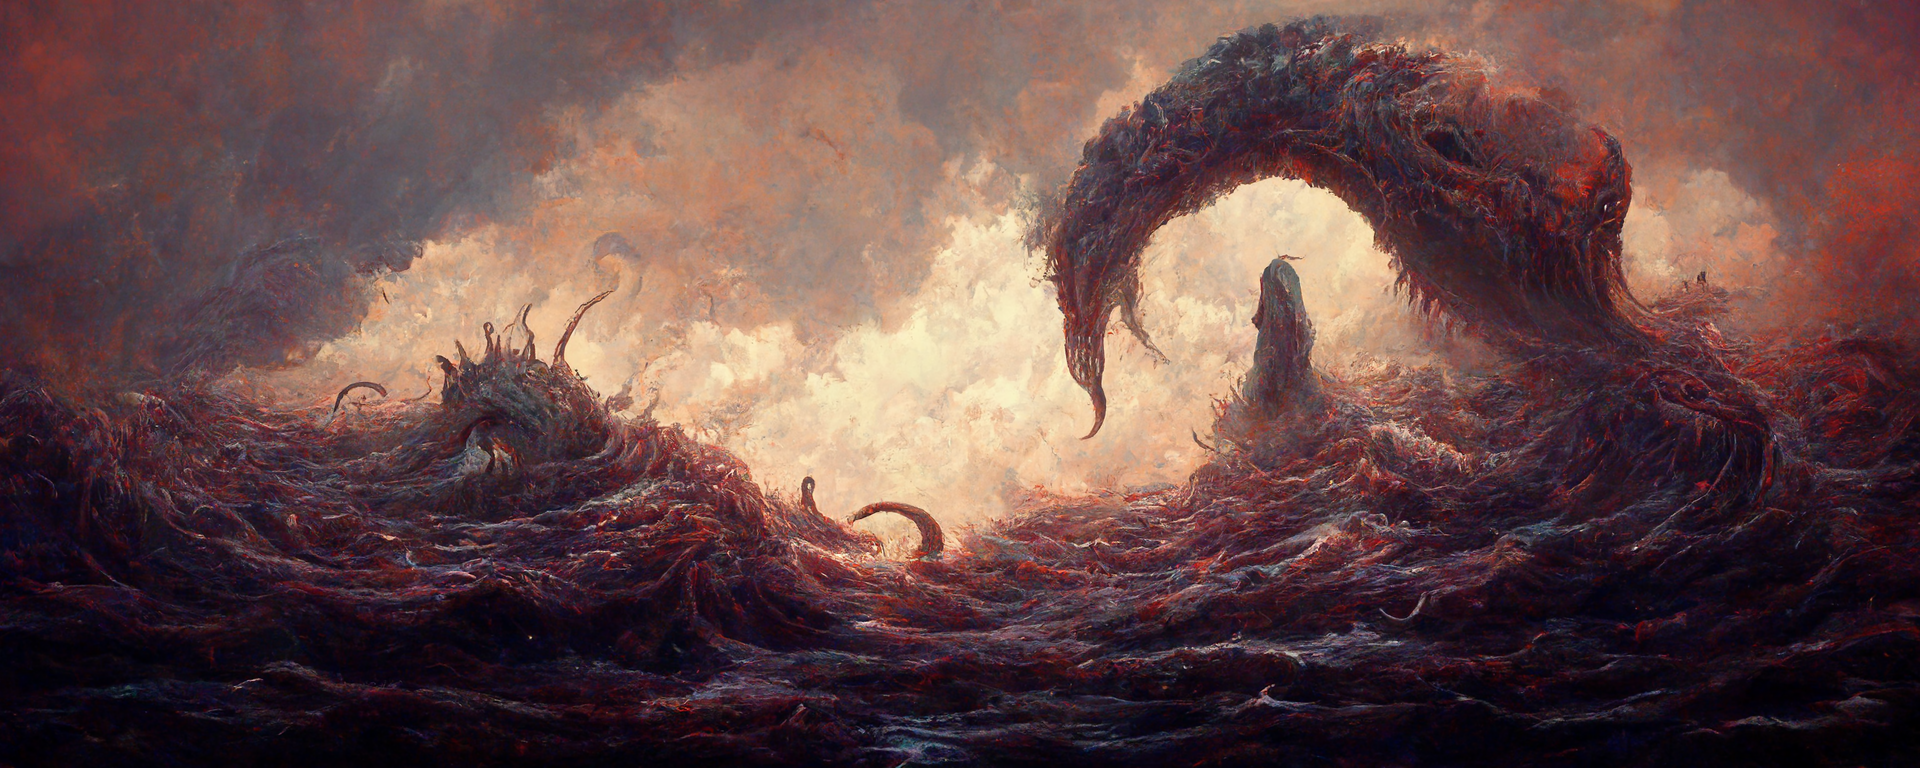 Leviathan by Temposhot